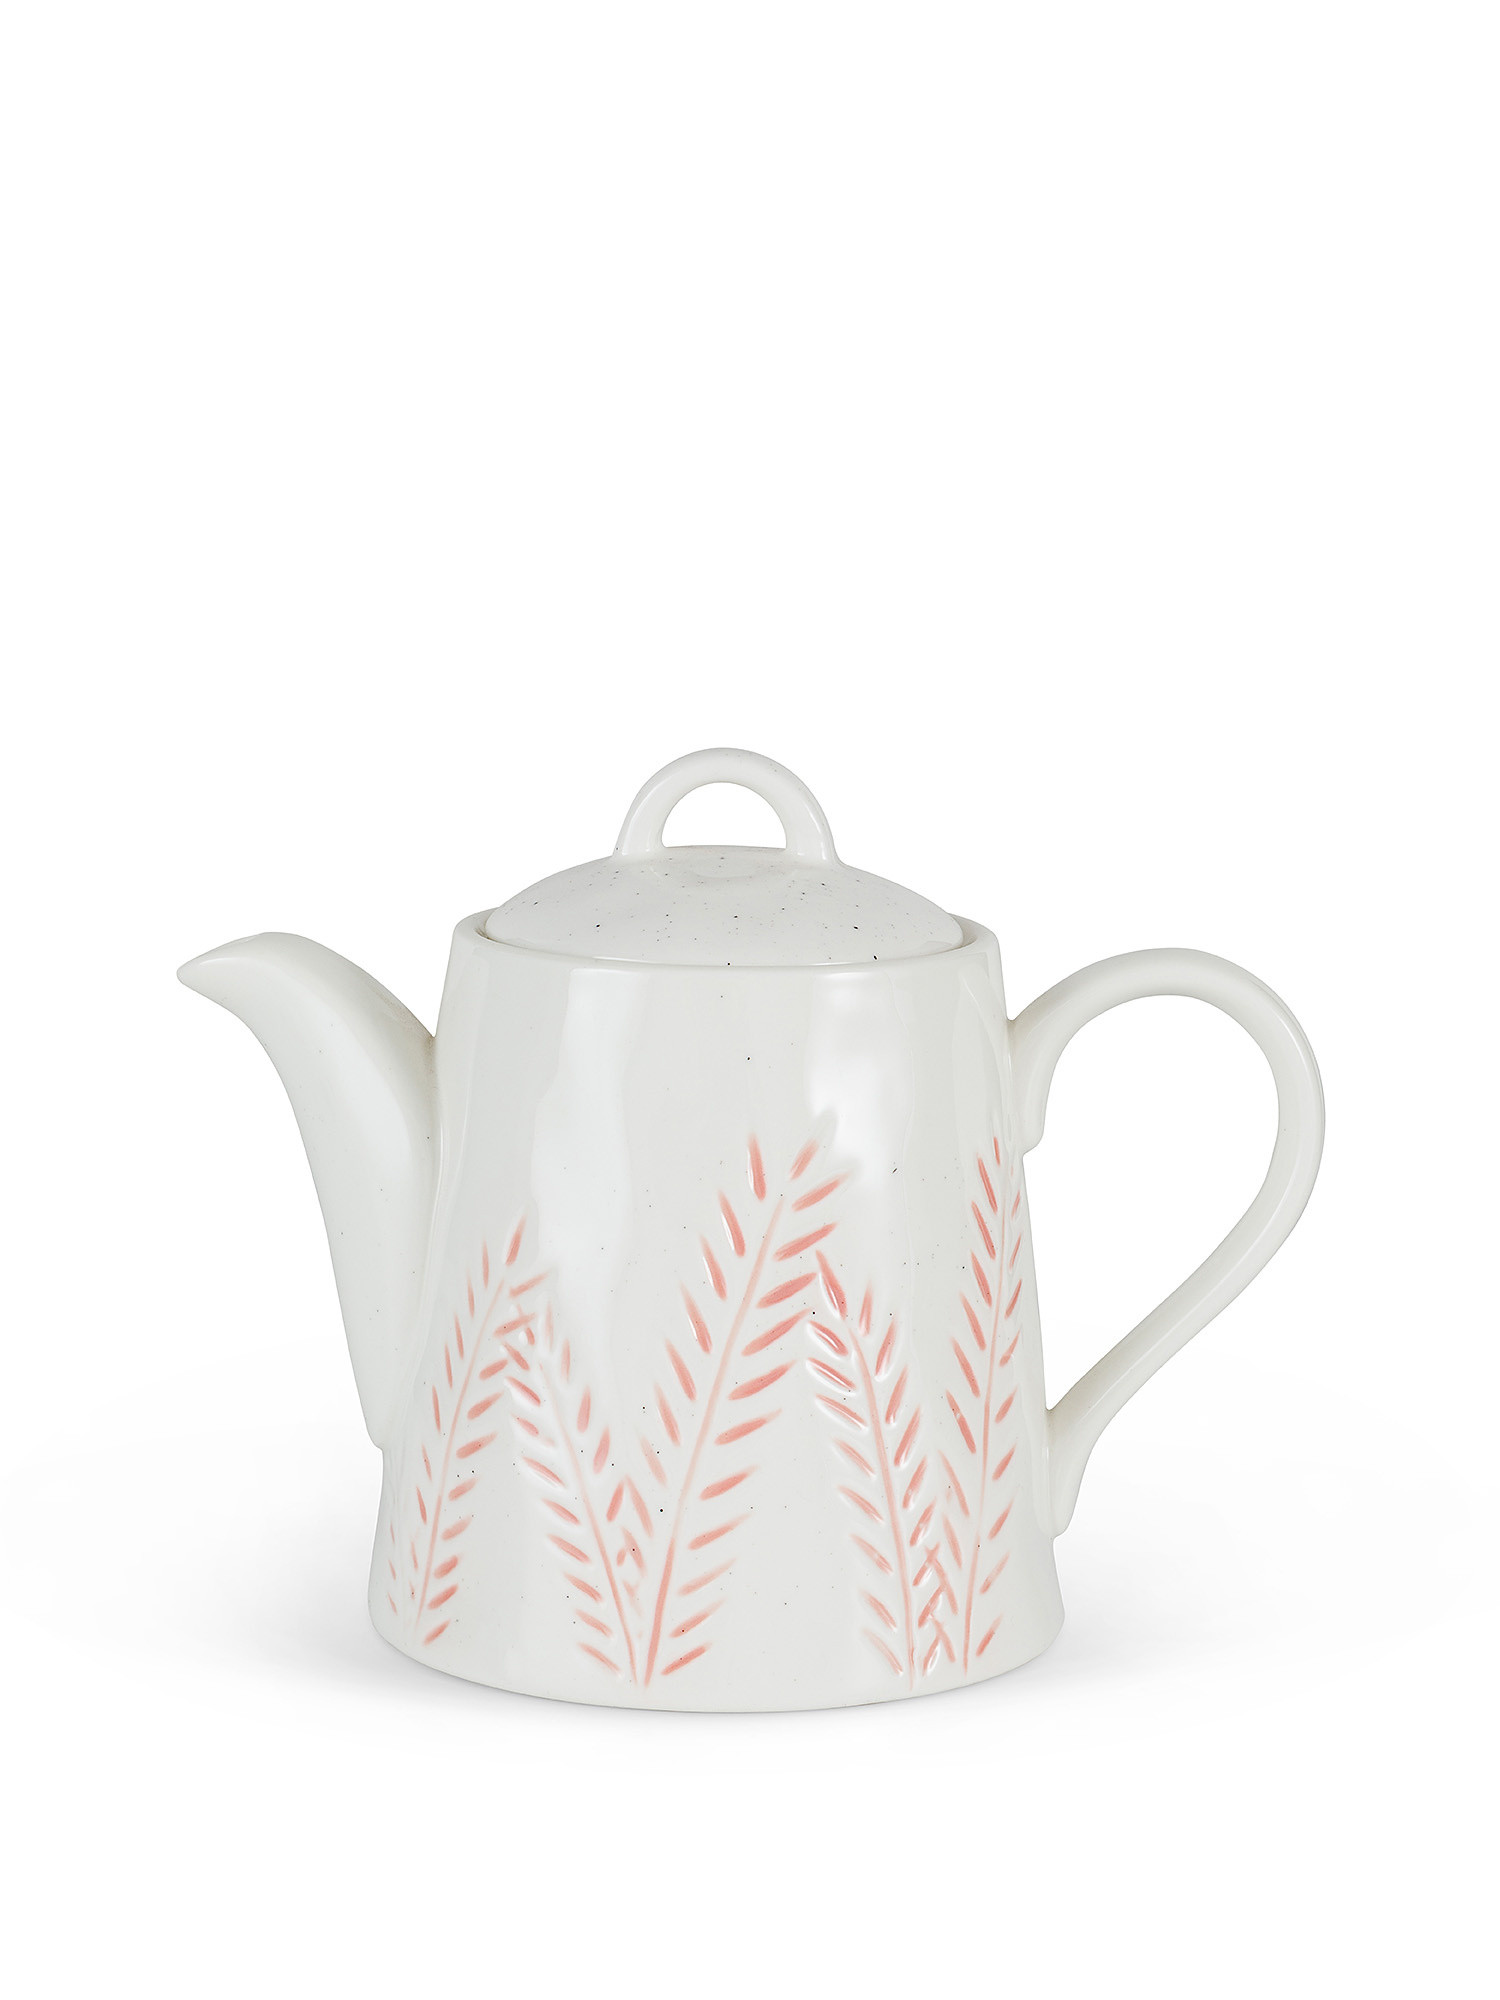 Porcelain teapot with foliage motif, White, large image number 0